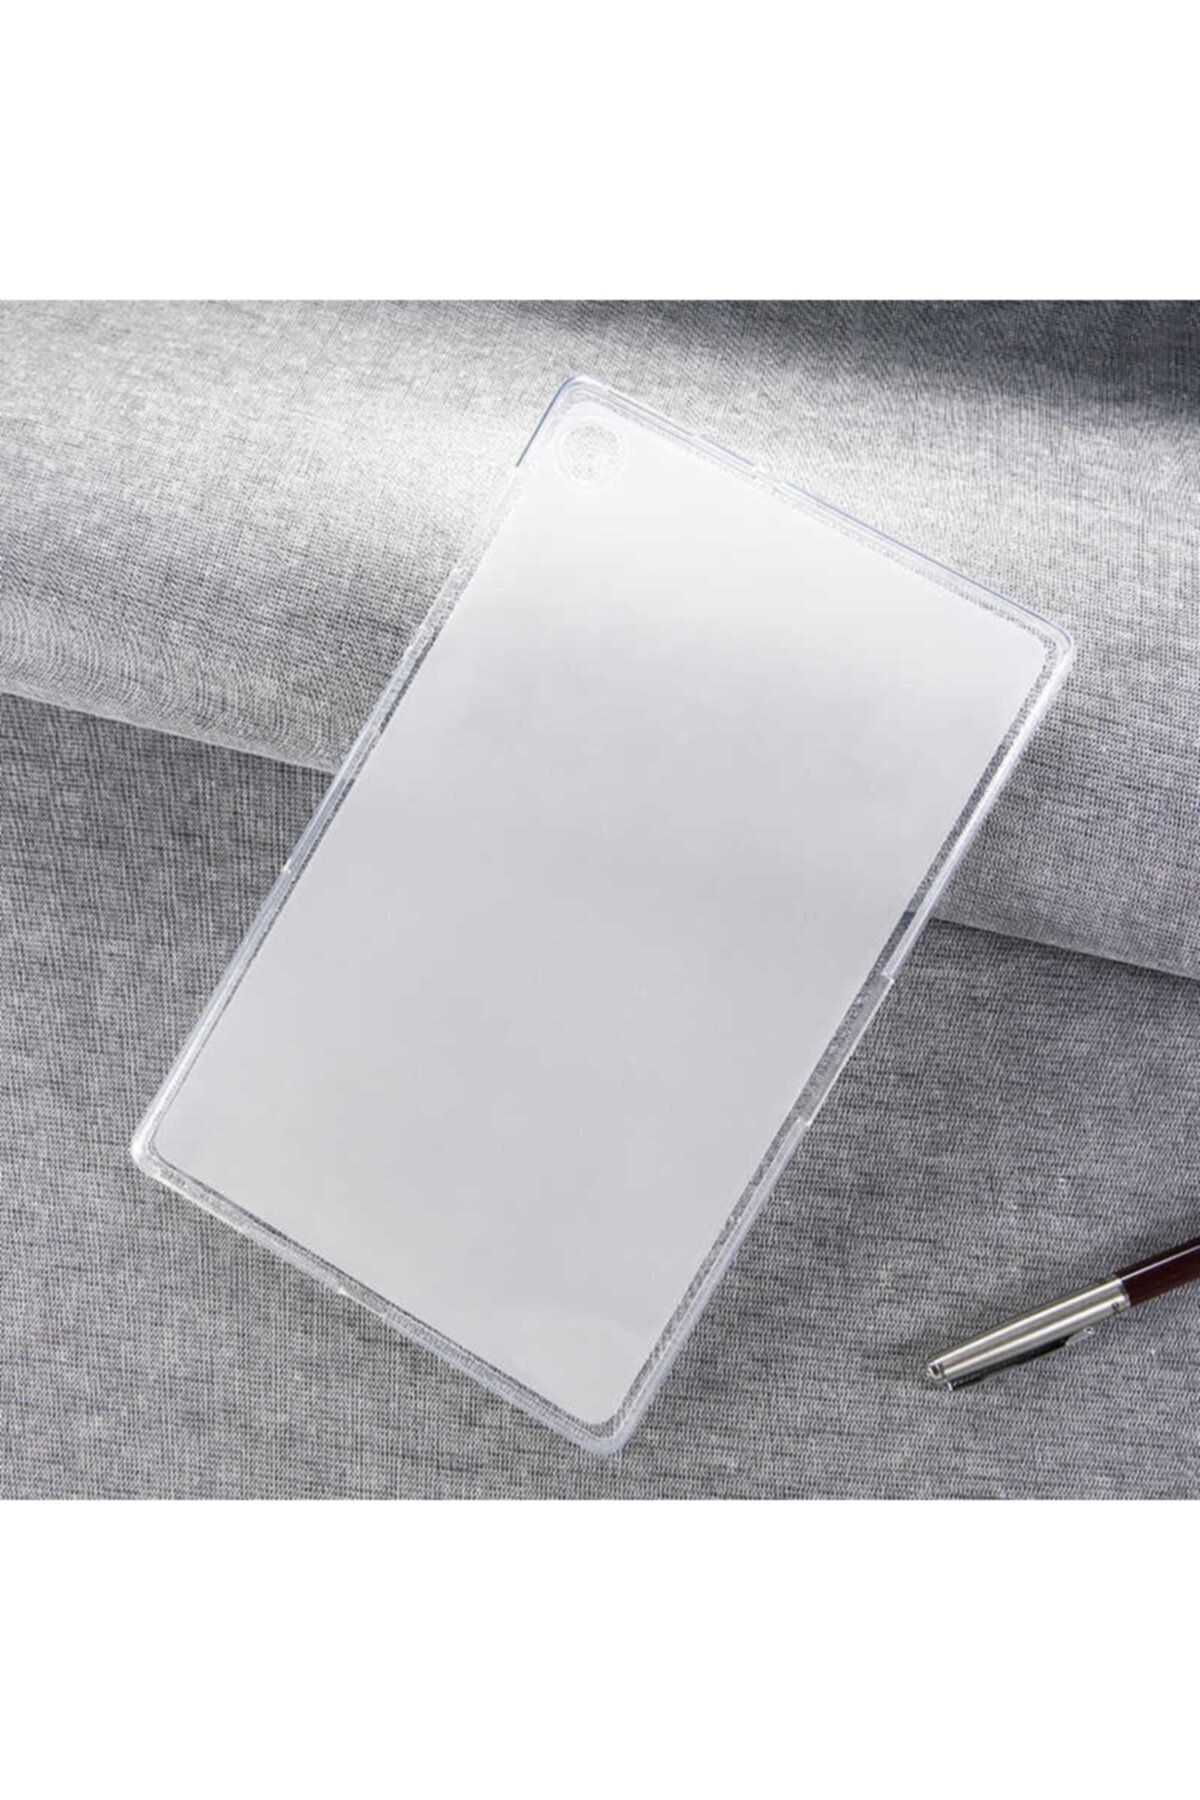 Nezih Case M10 Tb-x306f Uyumlu Gen.2 Tablet (ultra Slim) Şeffaf Yumuşak Silikon Kılıf